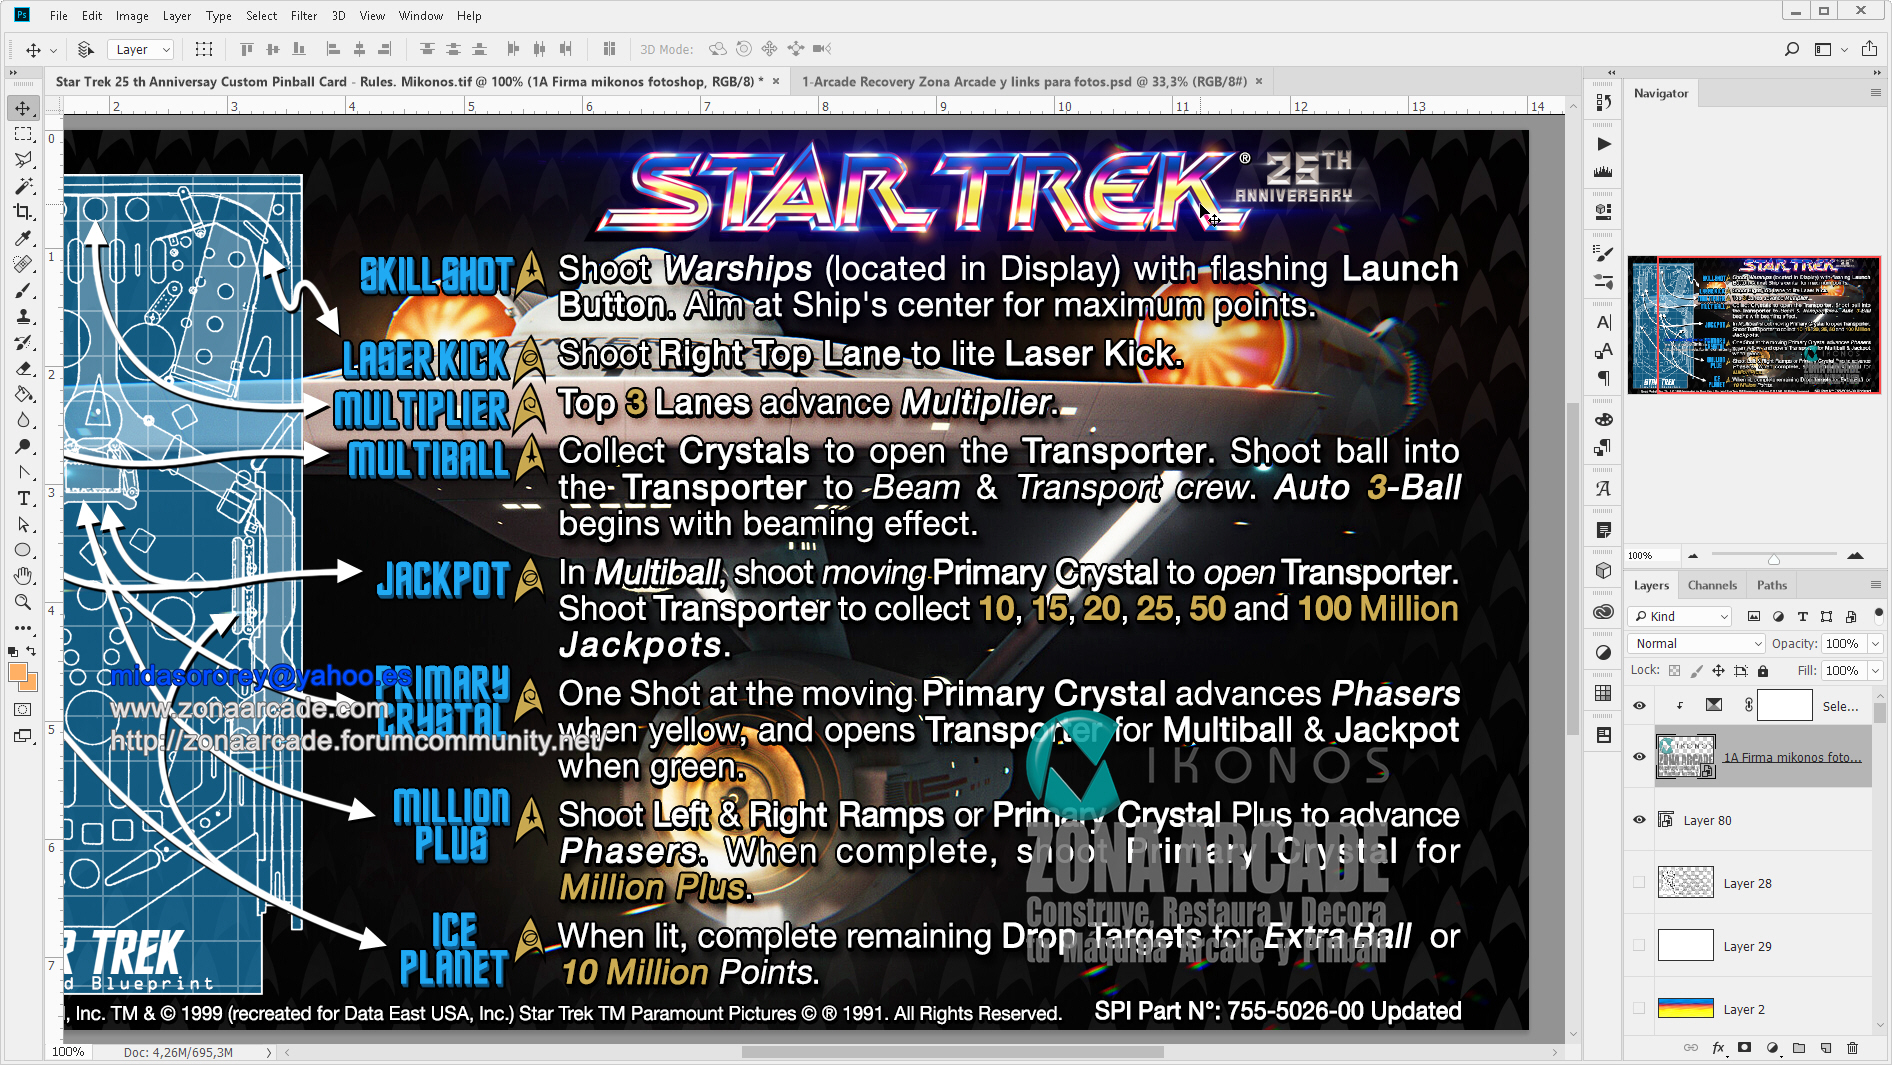 Star-Trek-25th-Anniversary-Custom-Pinball-Card-Rules2-Mikonos2